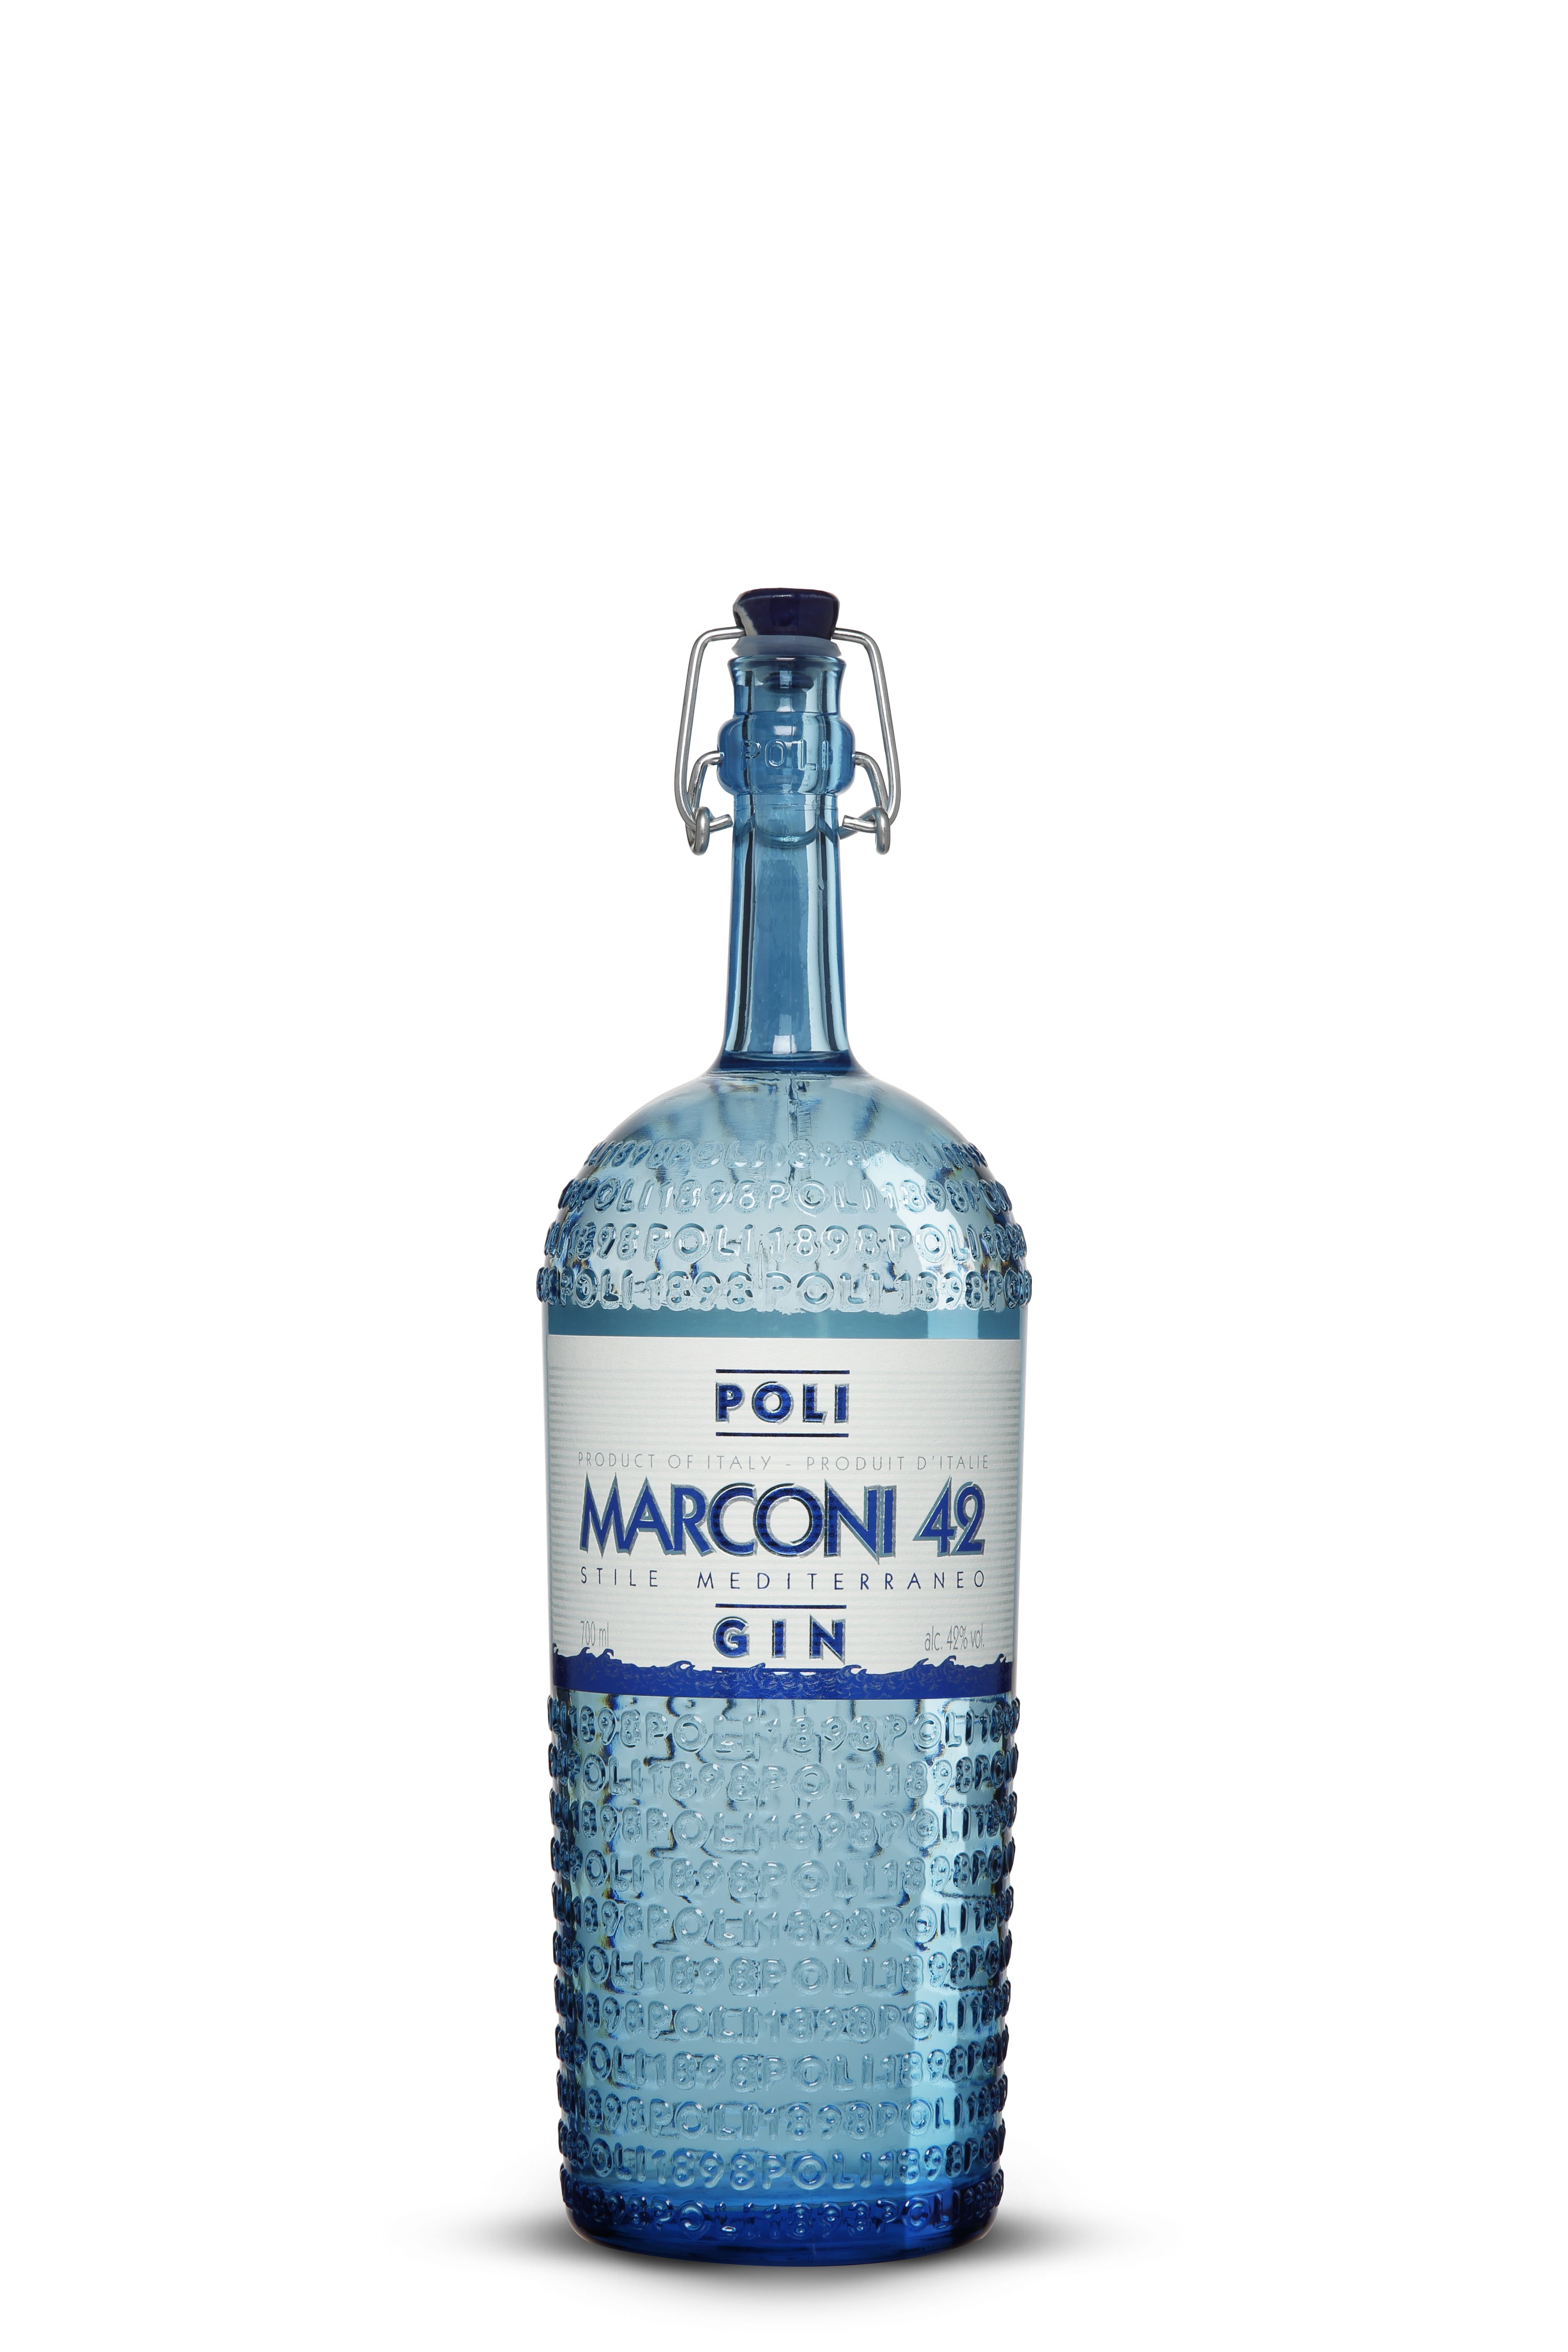 Poli Marconi Stile Mediterraneo Gin